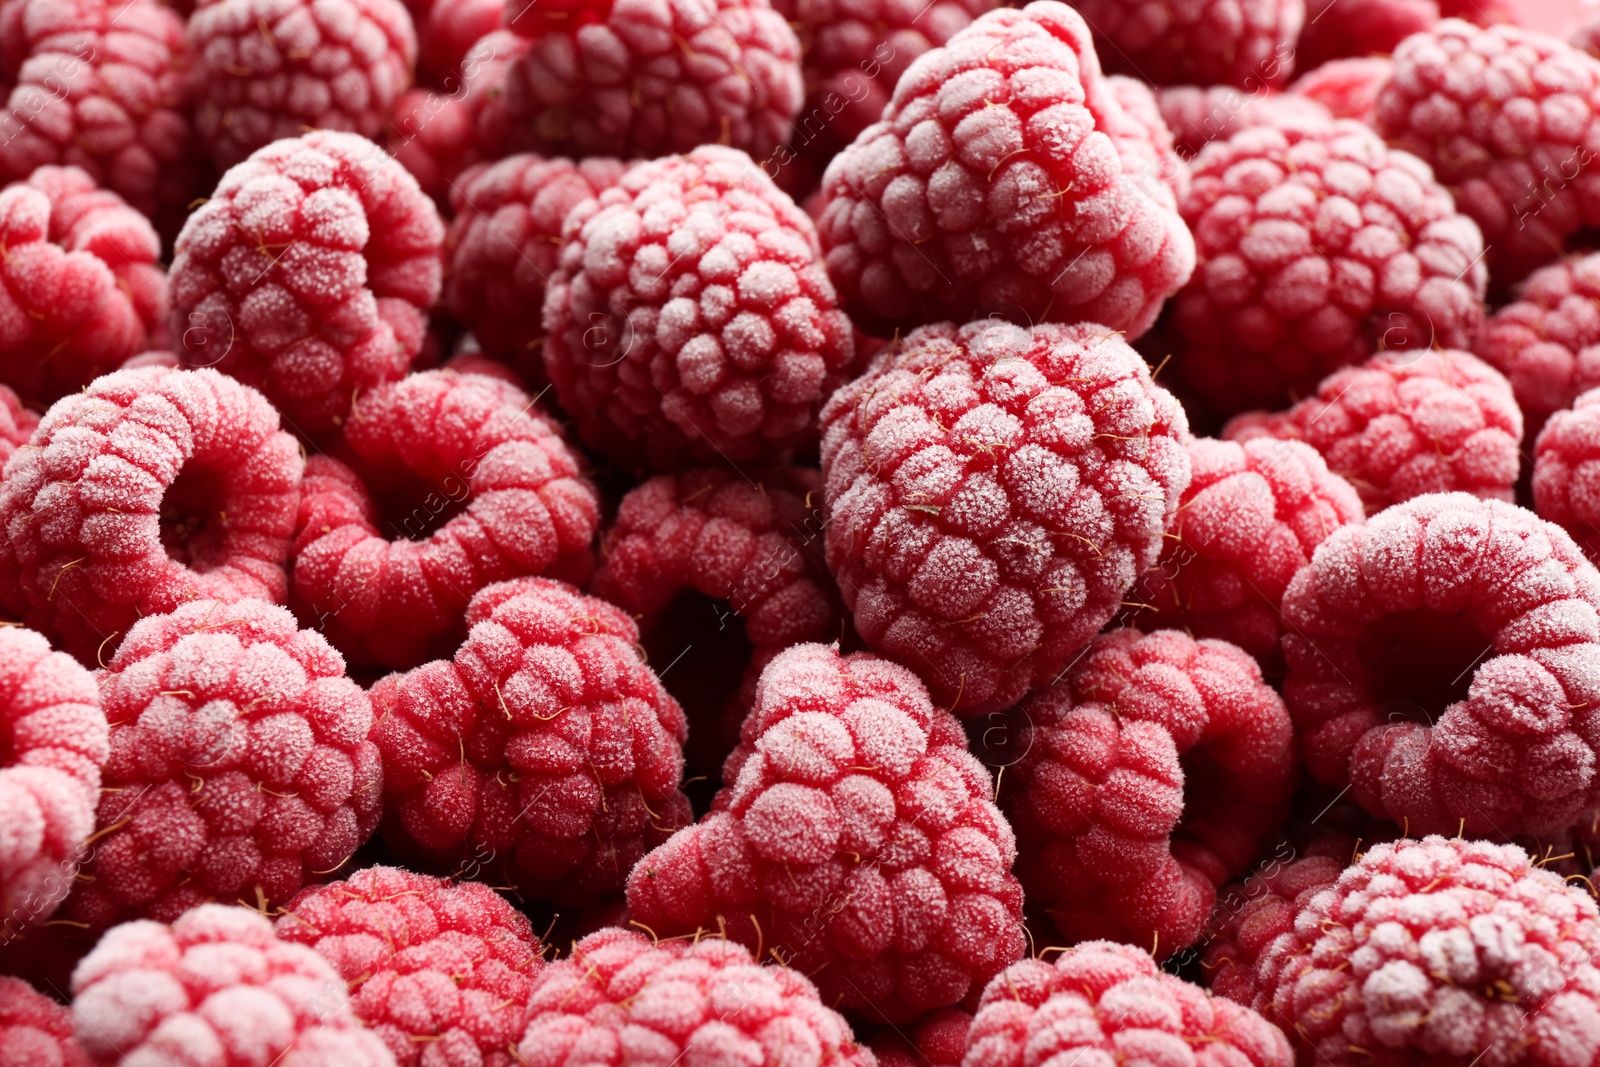 Photo of Tasty frozen raspberries as background, closeup view